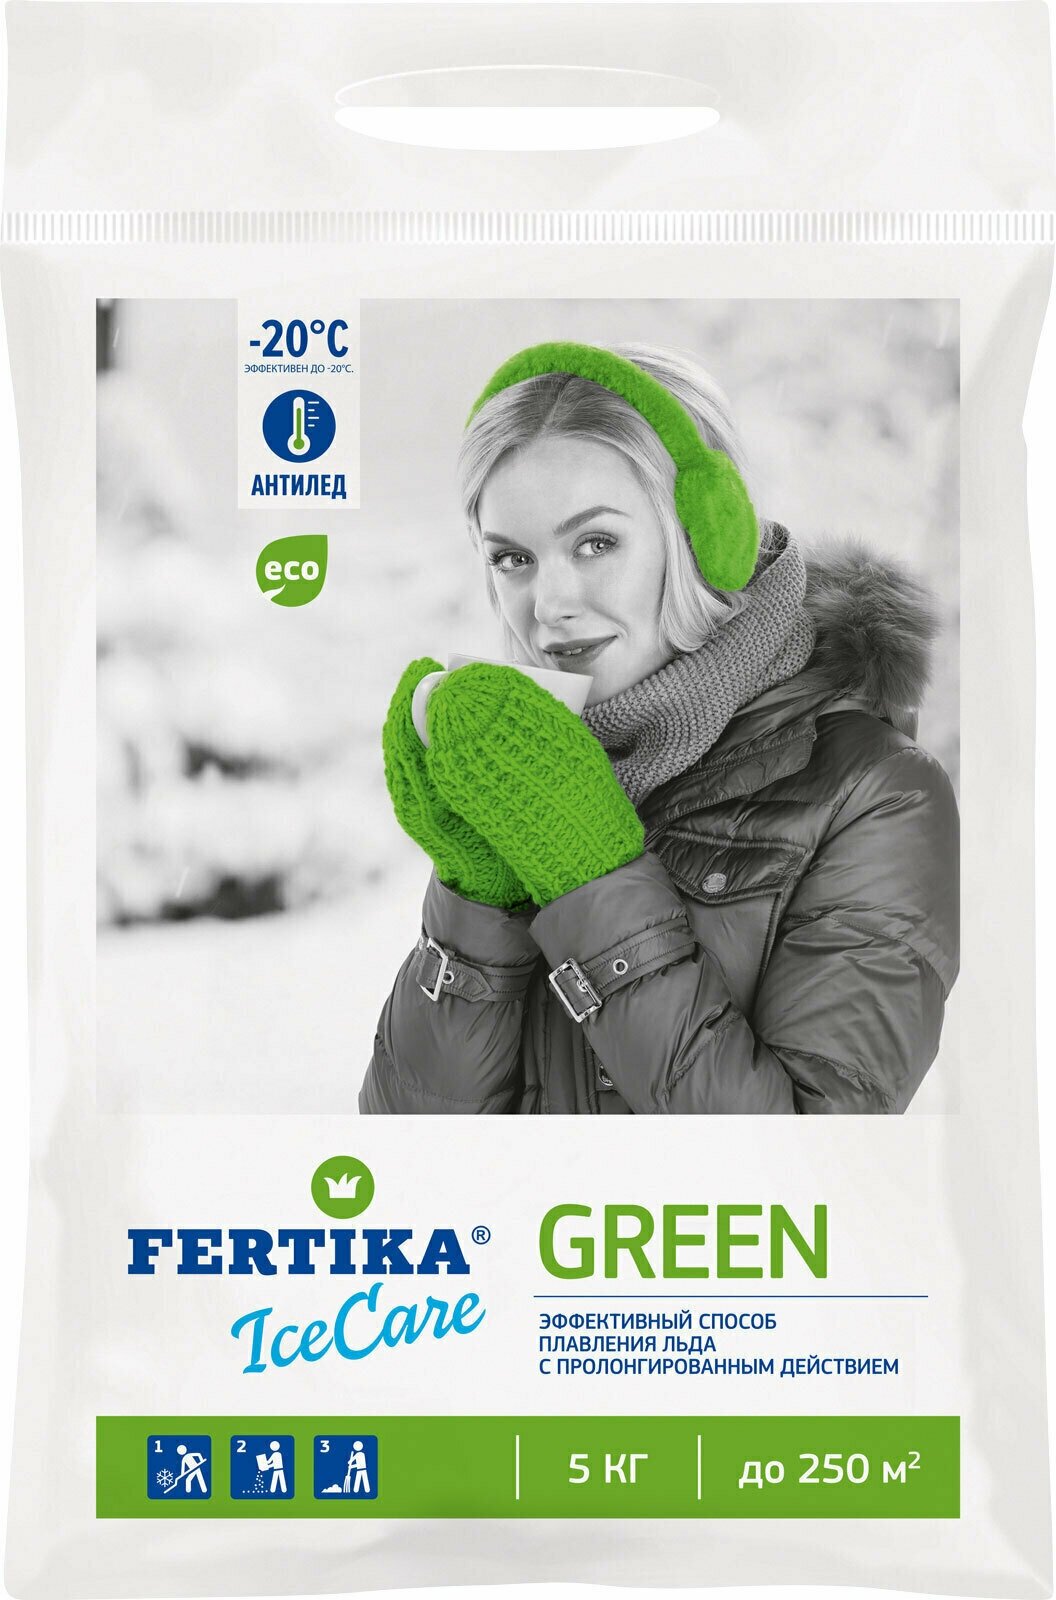 Противогололёдный реагент Fertika IceCare Green, 5 кг - фотография № 1